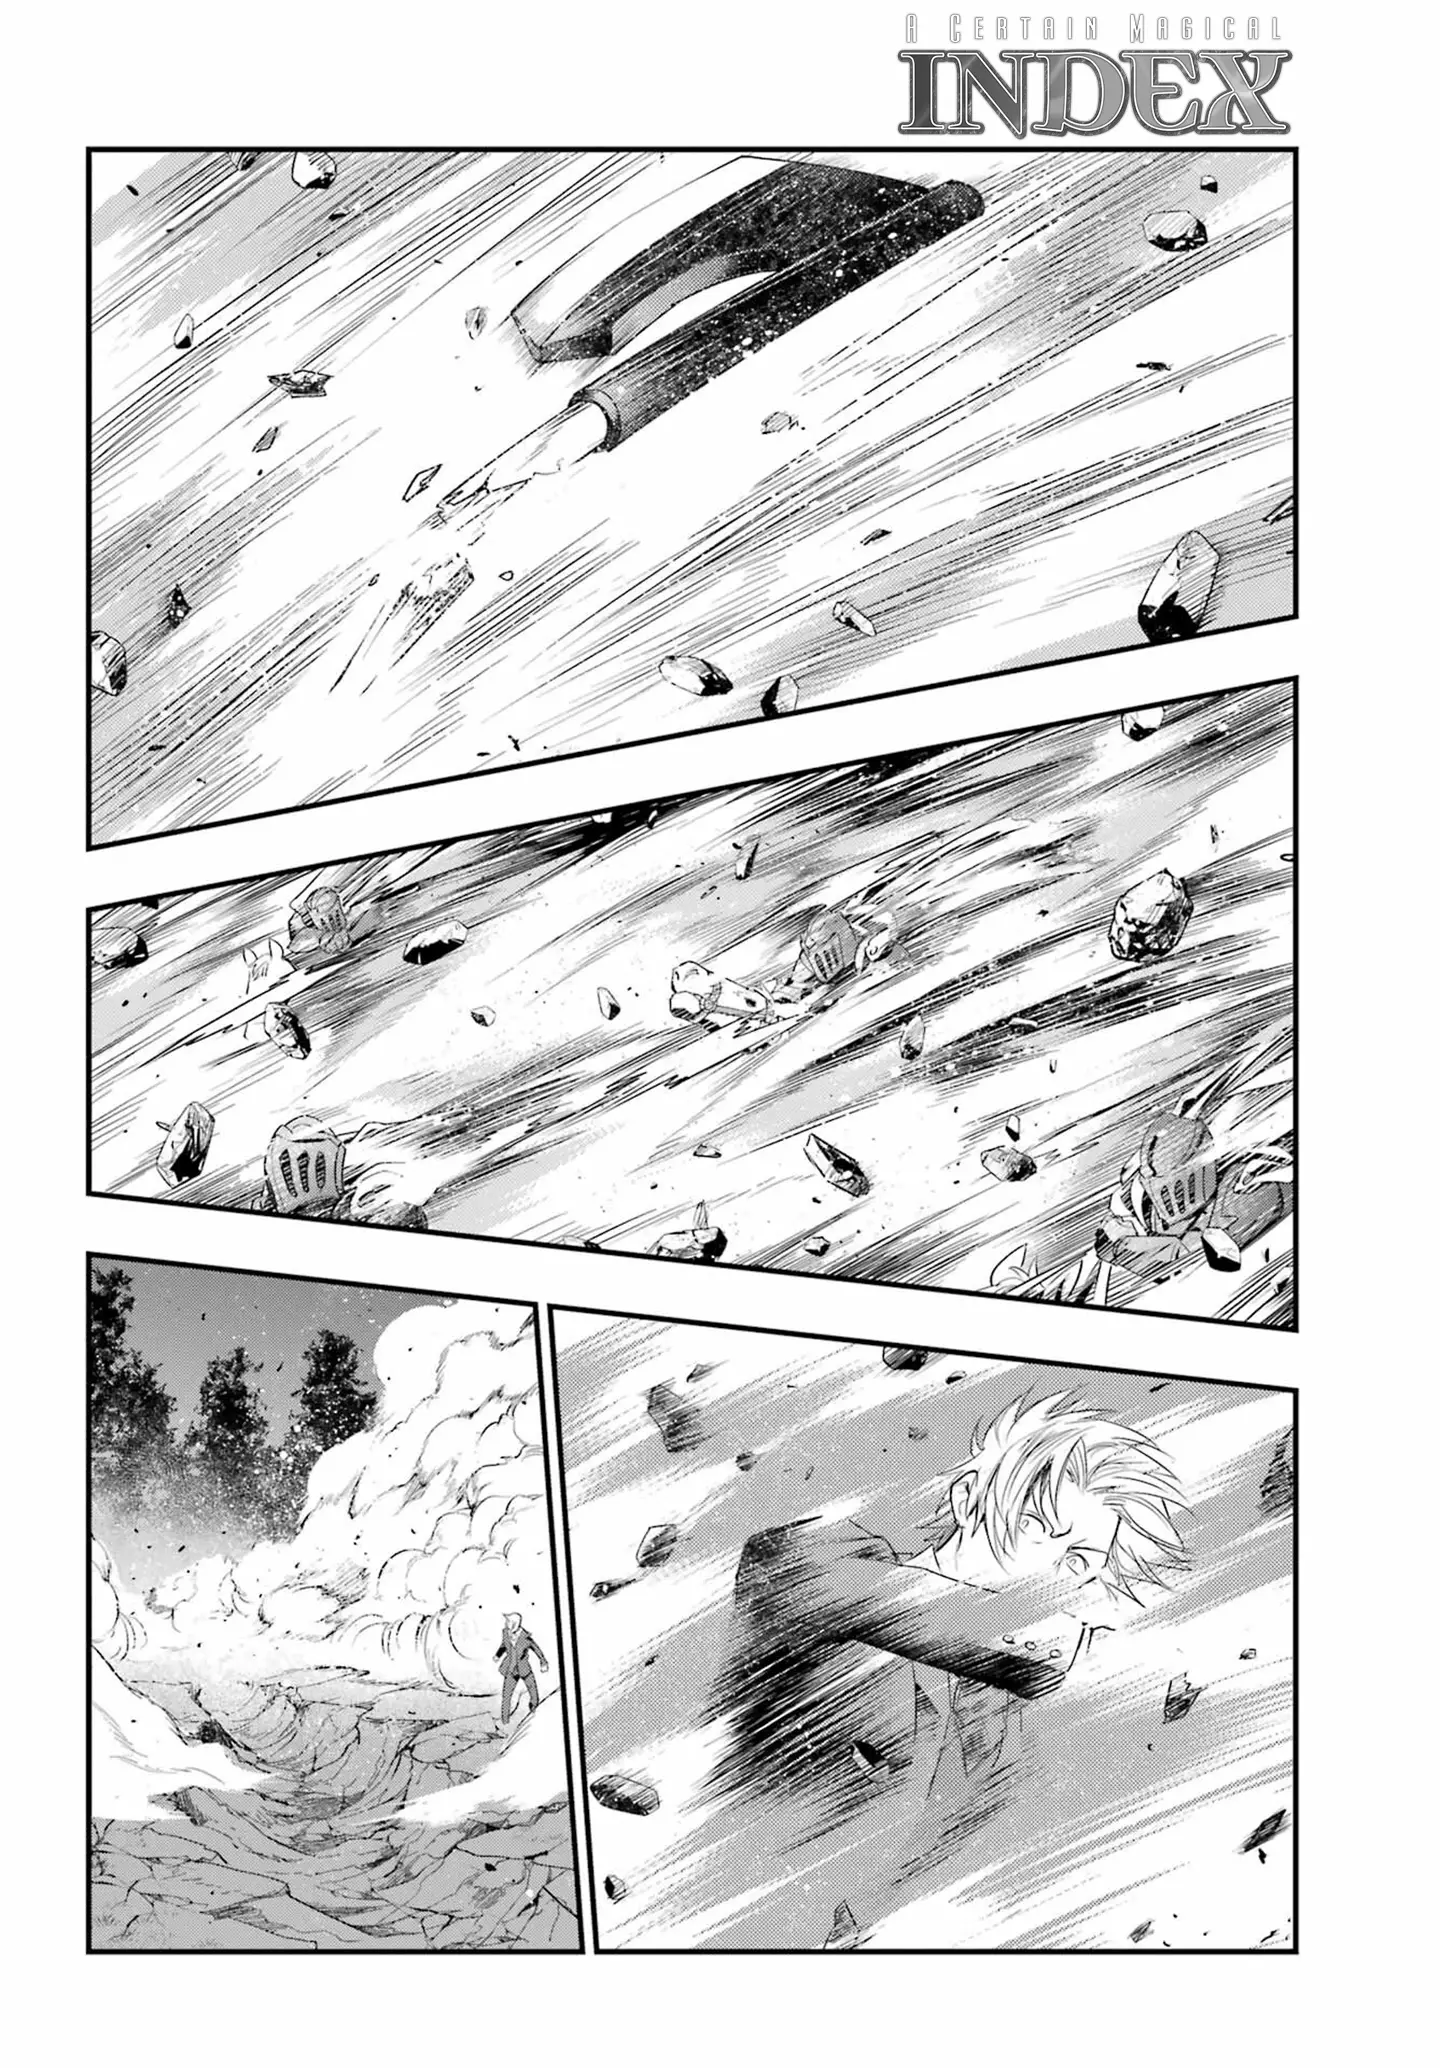 Toaru Majutsu No Index - 4Koma Koushiki Anthology - 177 page 35-198d2c10